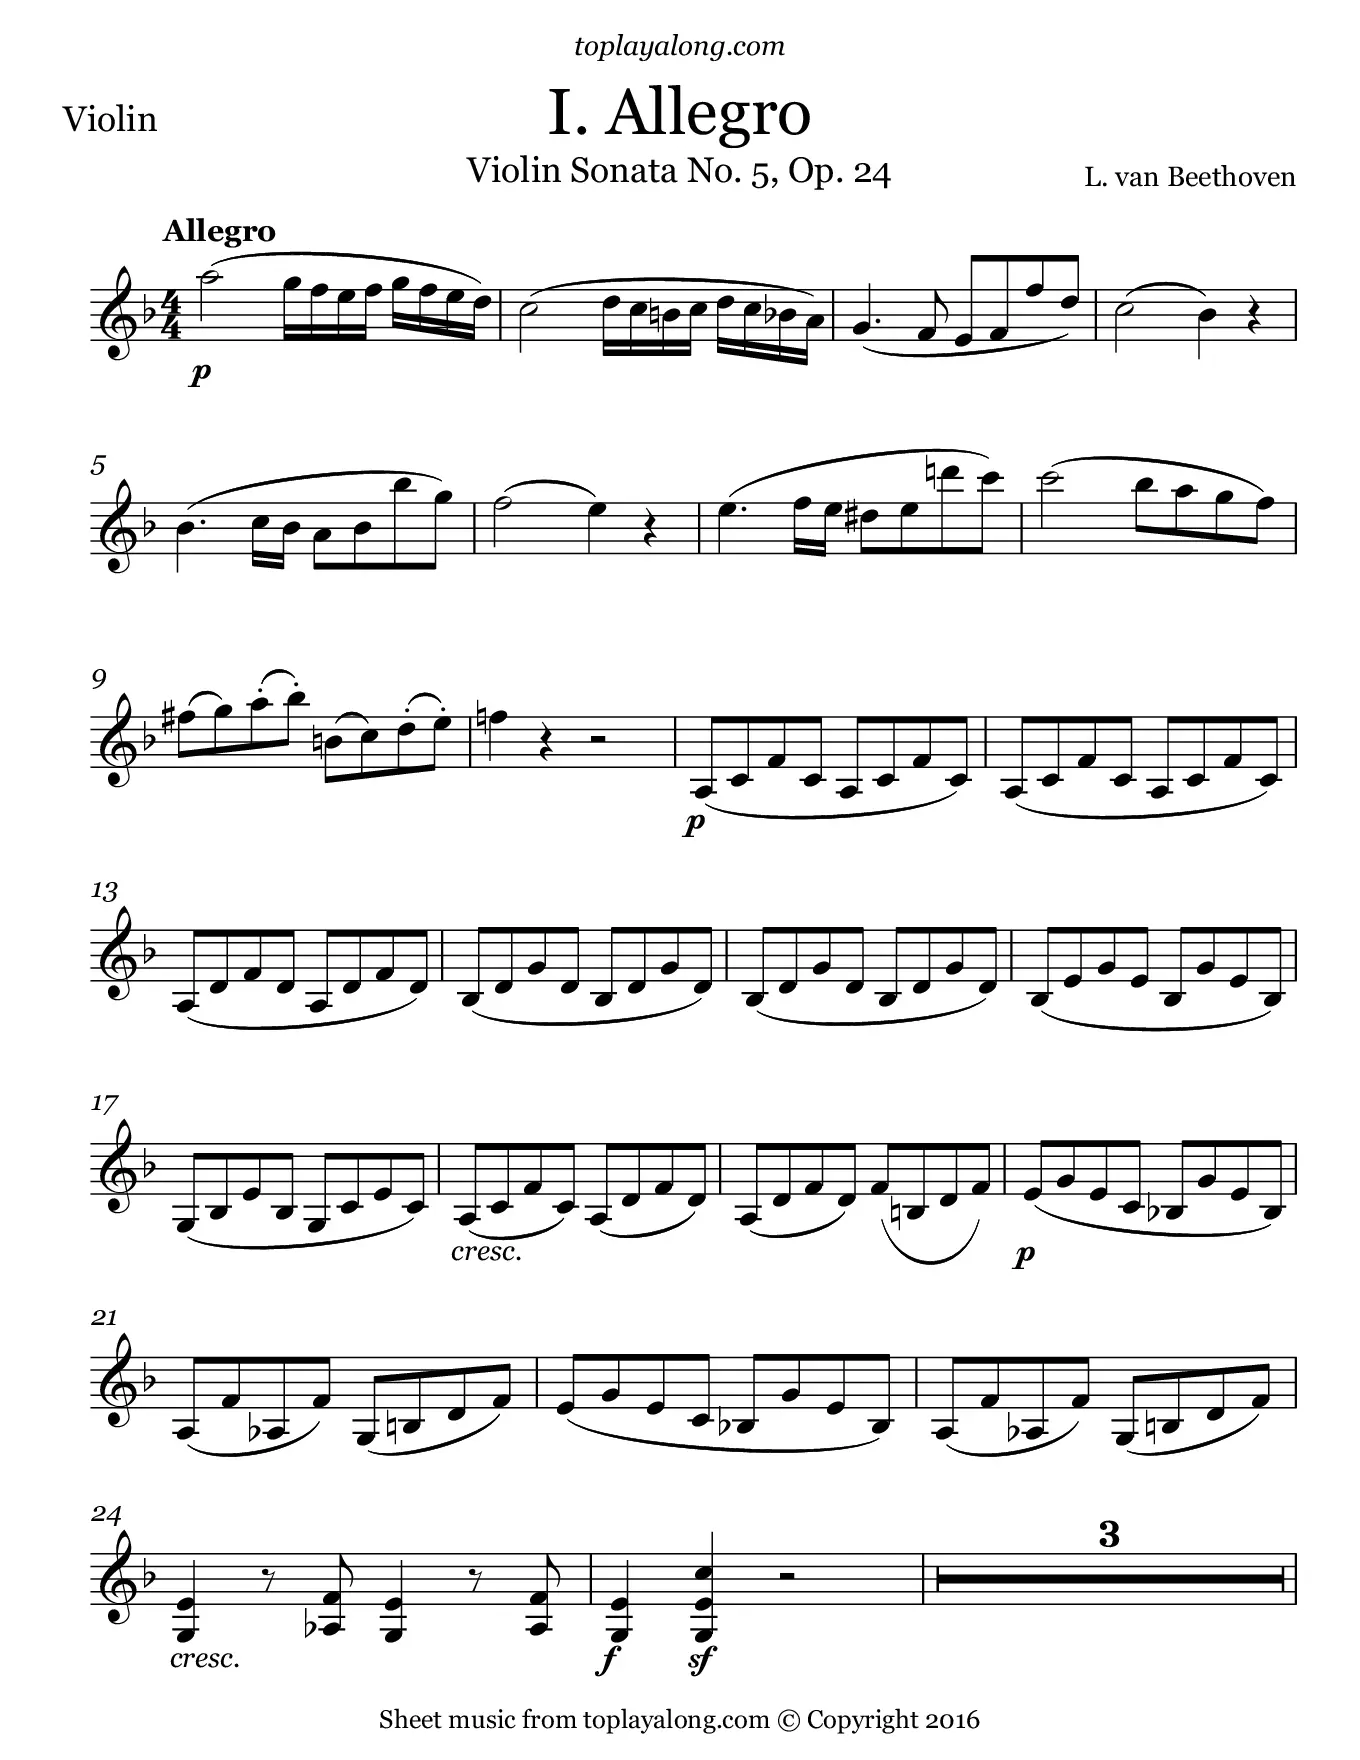 beethoven spring sonata violin imslp - How many sonatas did Beethoven write